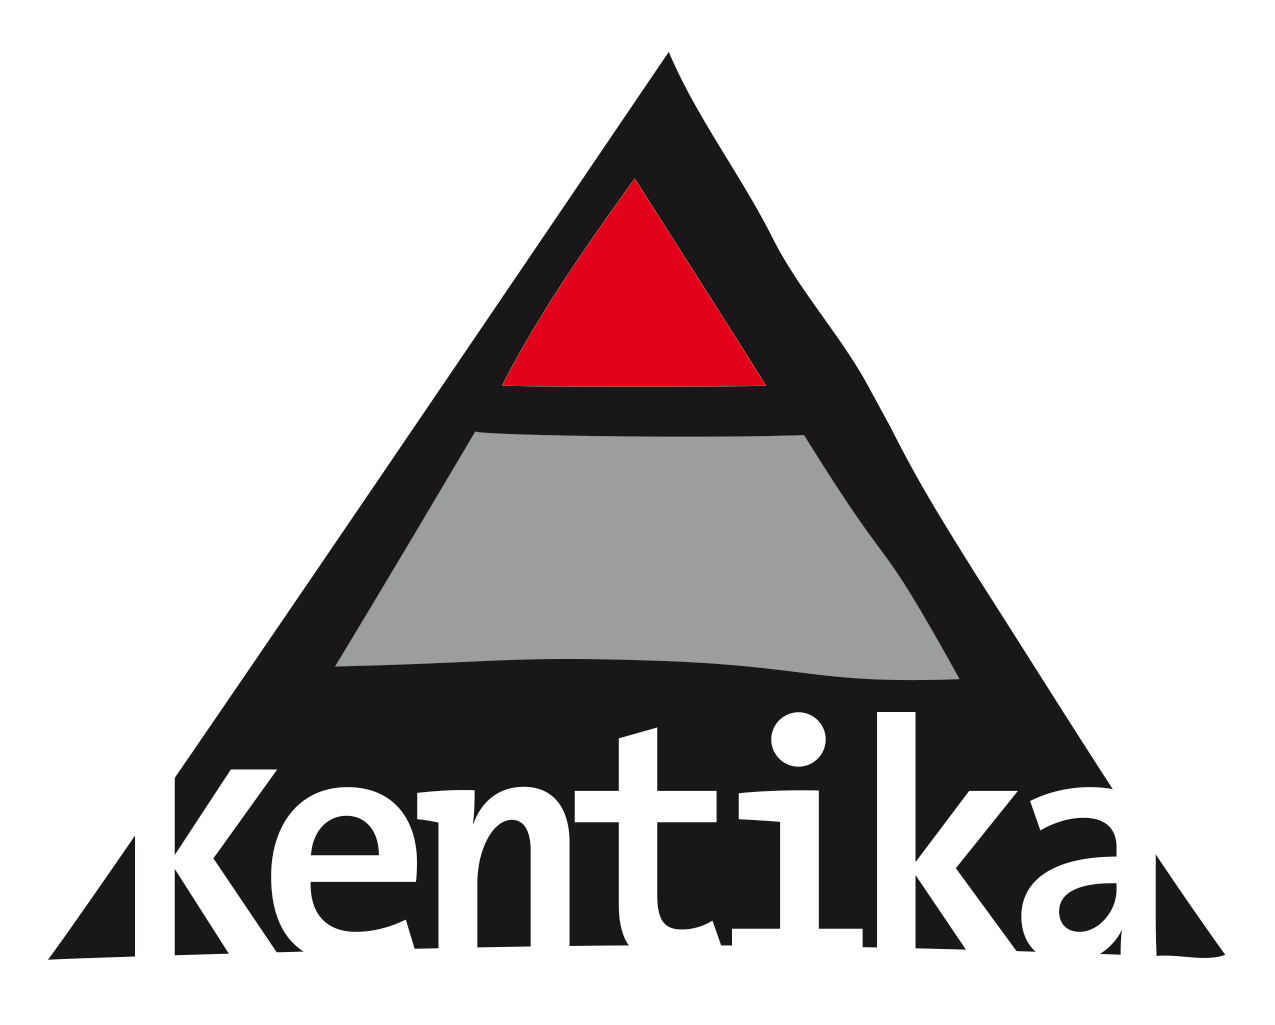 Kentika logo